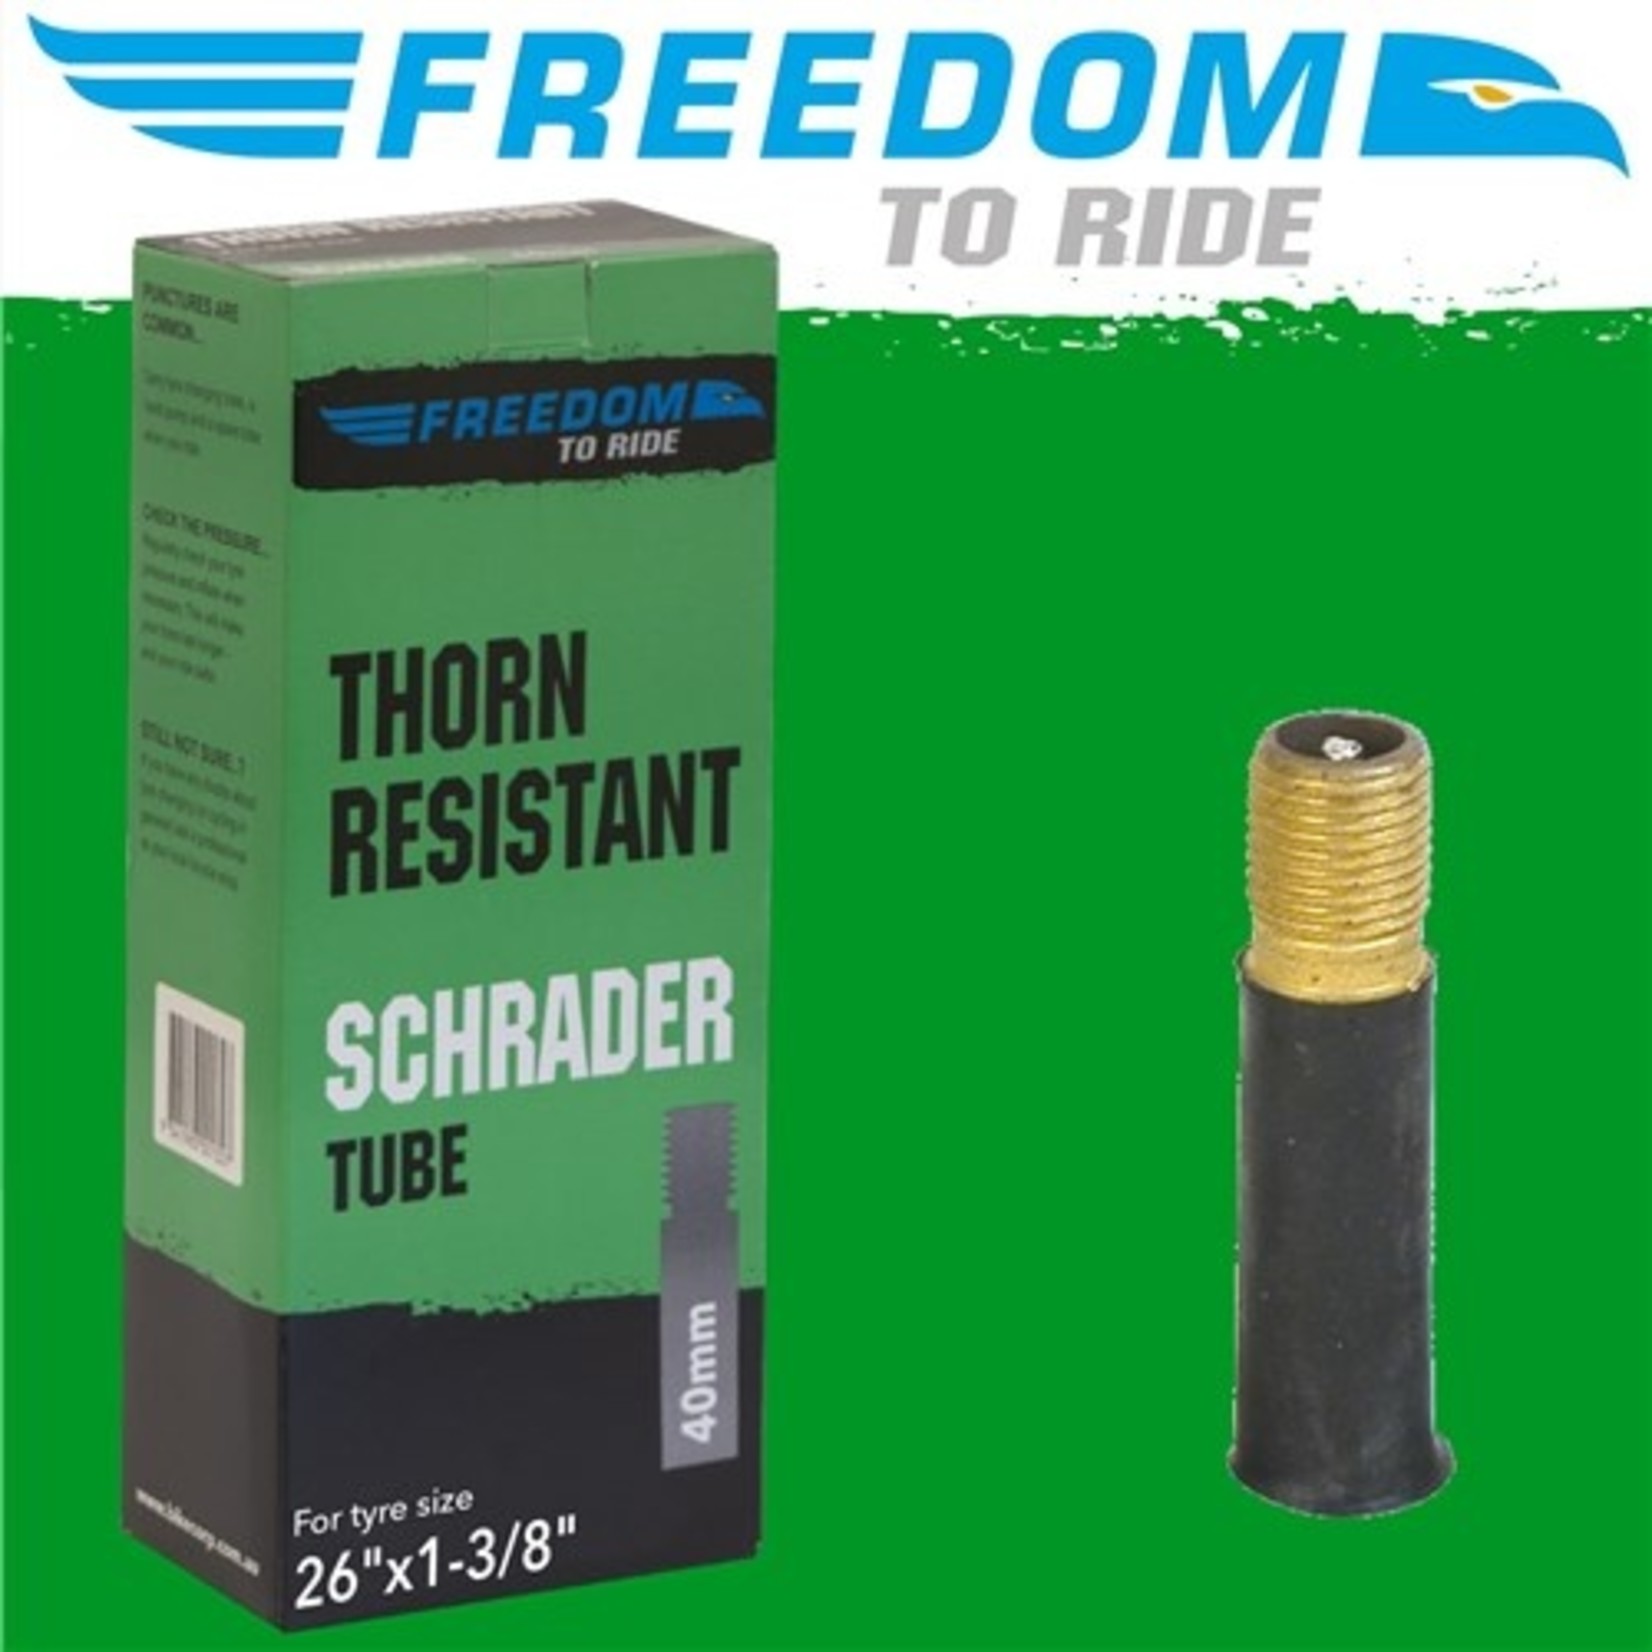 Freedom Freedom Bike Tube - 26" X 1-3/8 - Thorn Resistant Schrader Valve 40mm